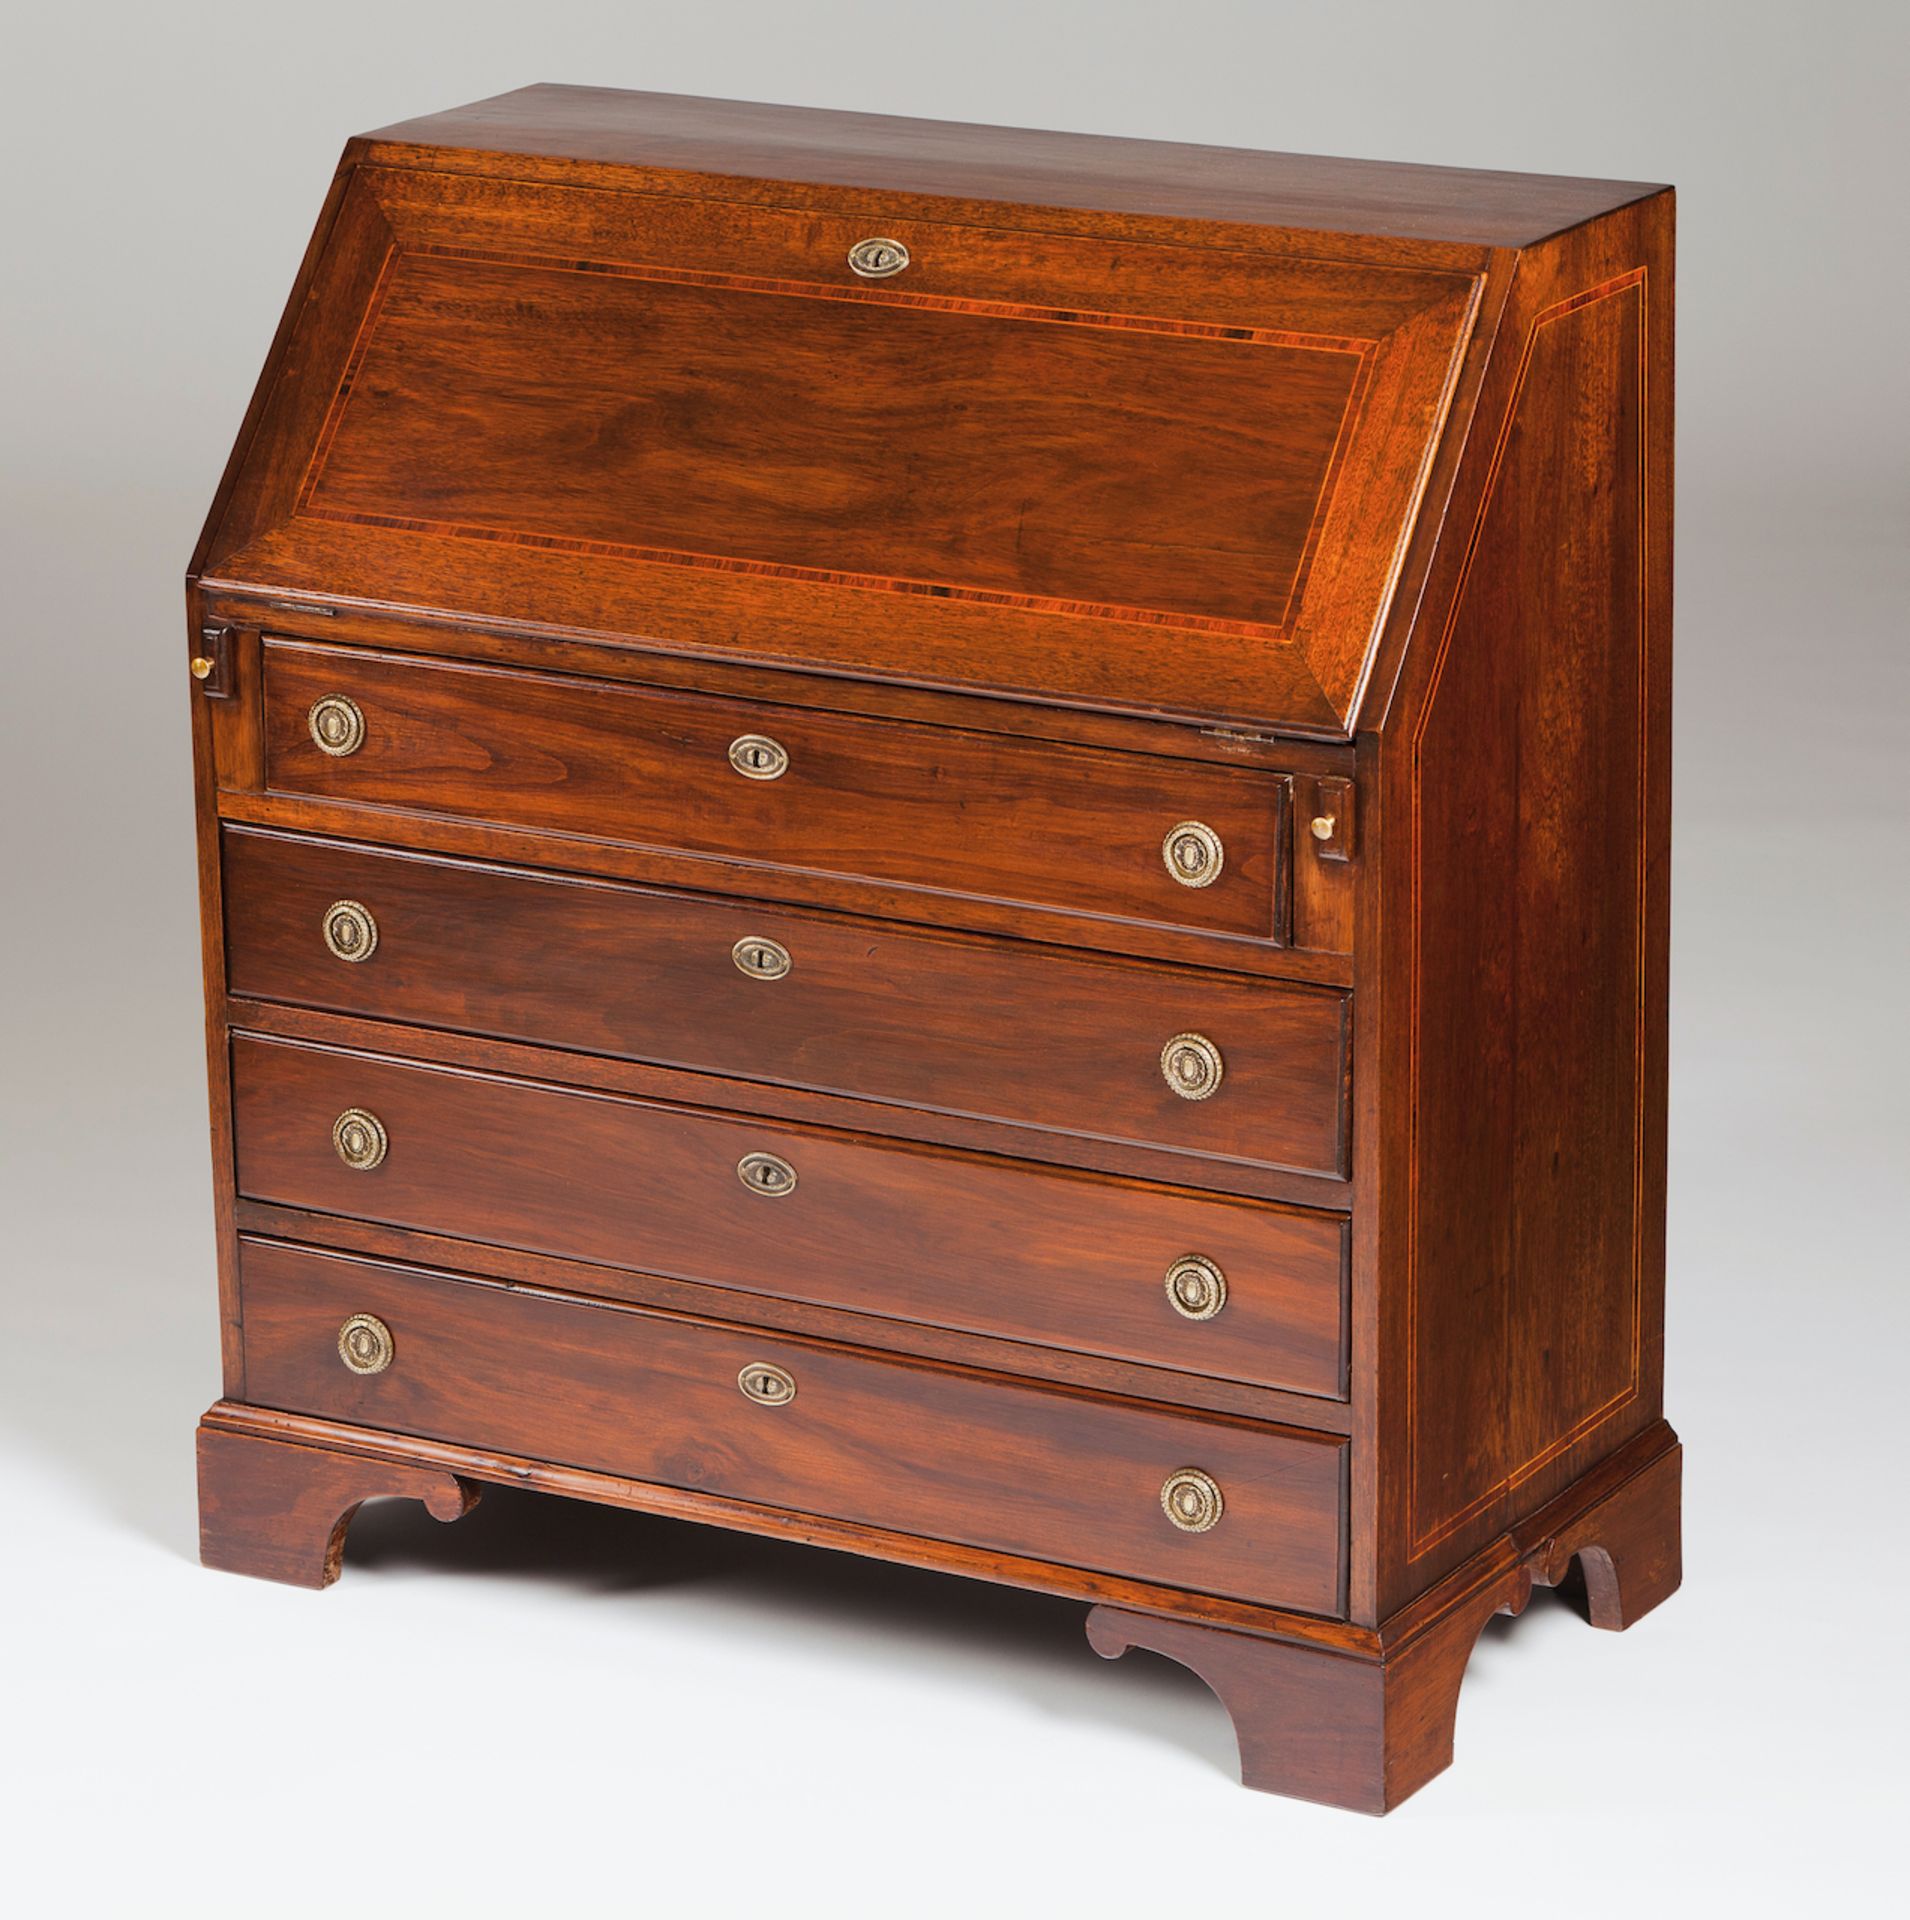 A George III bureauMahoganyInner drawers and pigeon-holesFour long drawersEngland, 19th century(wear